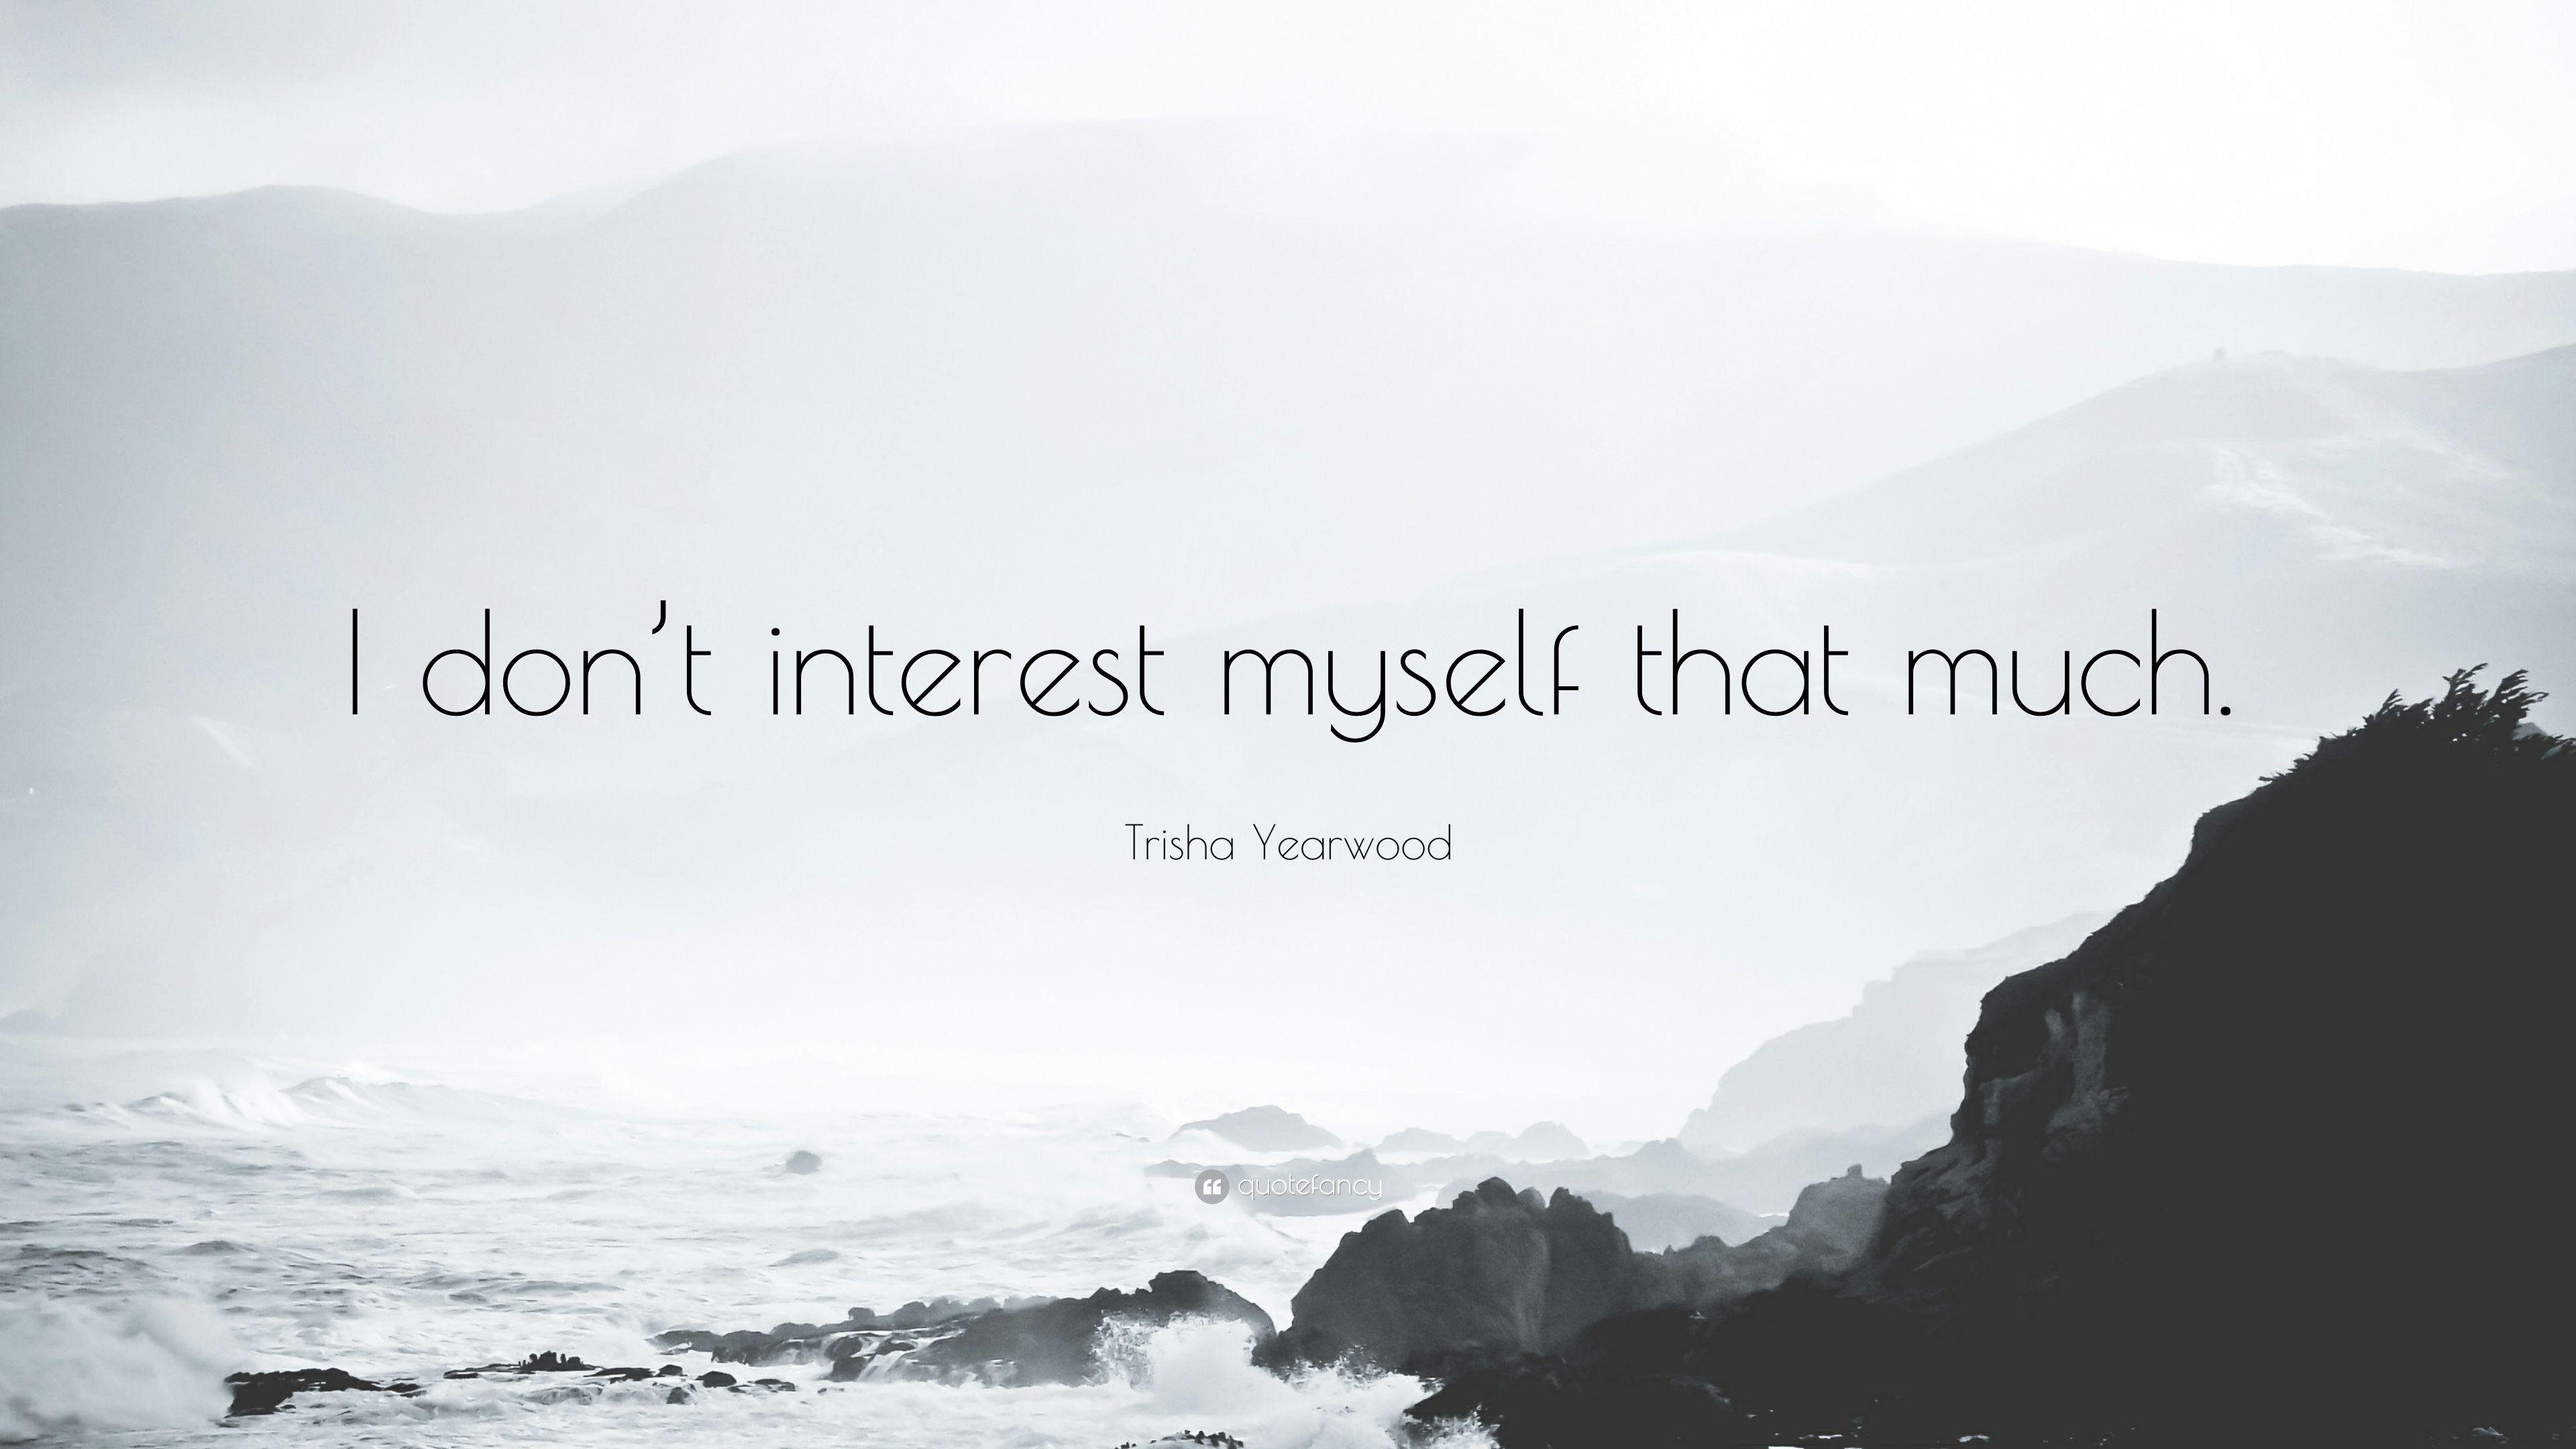 Trisha Yearwood Quote: “I don't interest myself that much.” 7